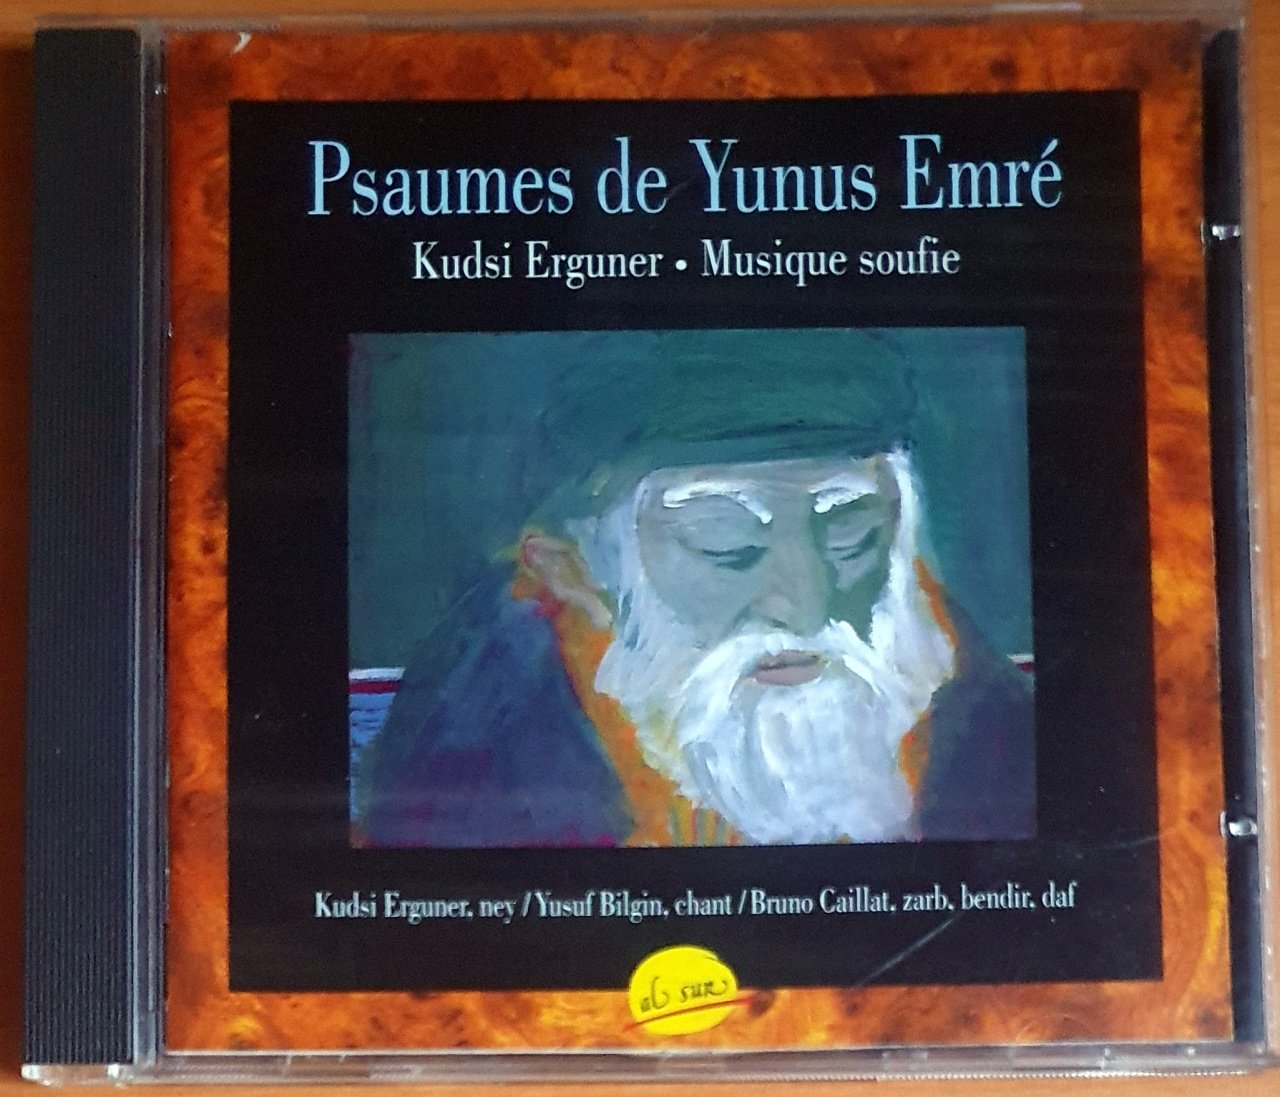 PSAUMES DE YUNUS EMRE / KUDSİ ERGUNER (1996) - CD 2.EL